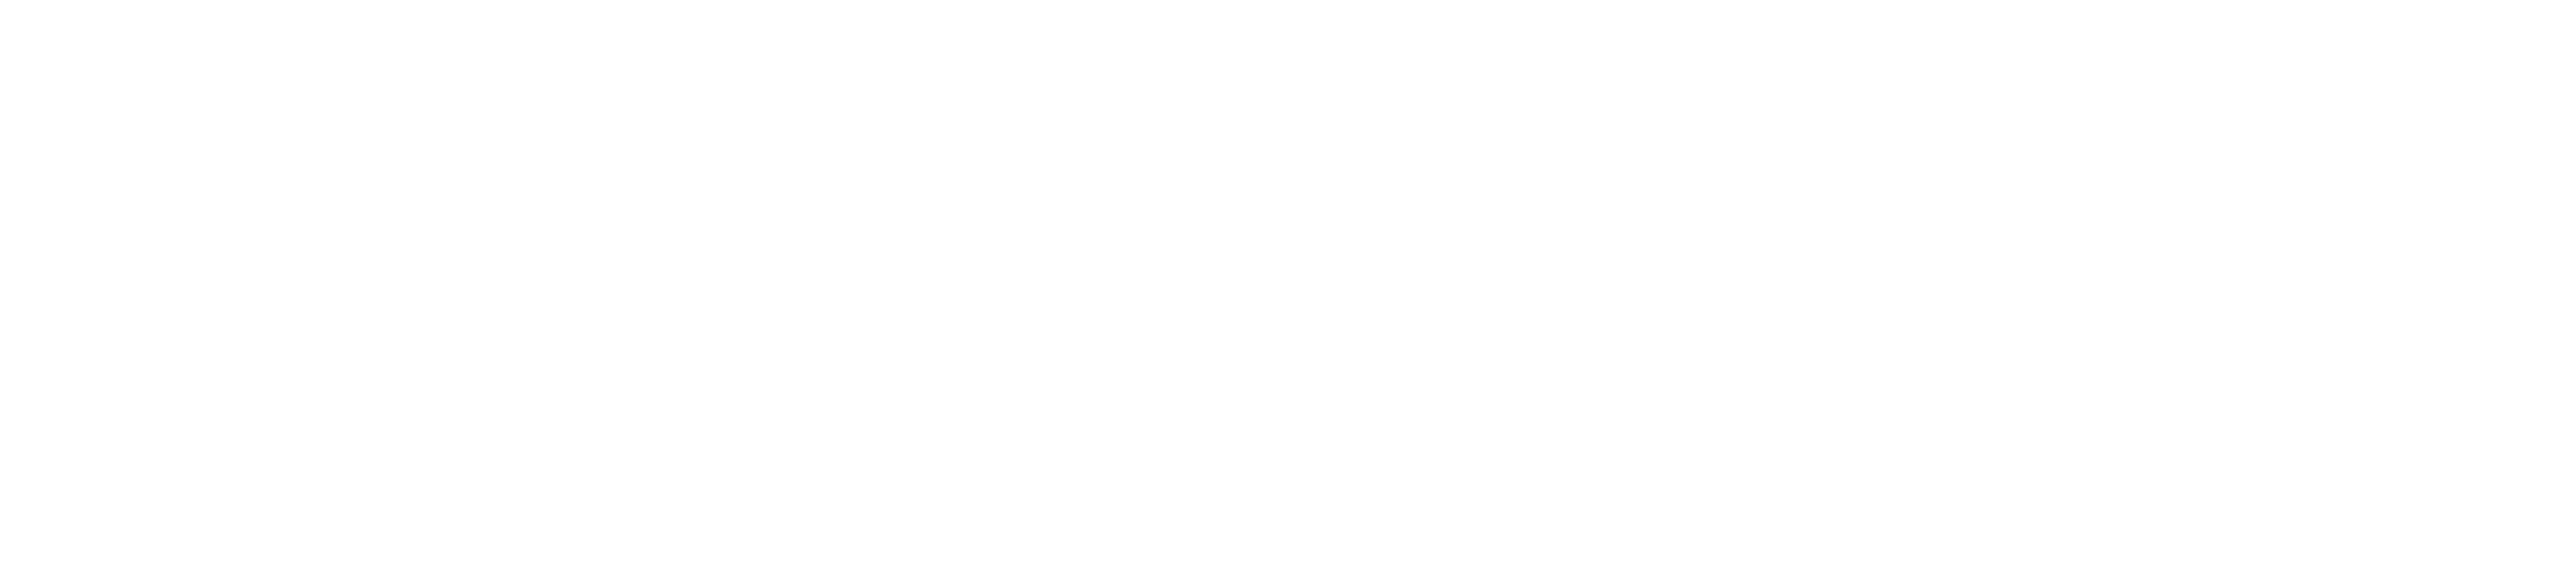 Behandy logo blanc